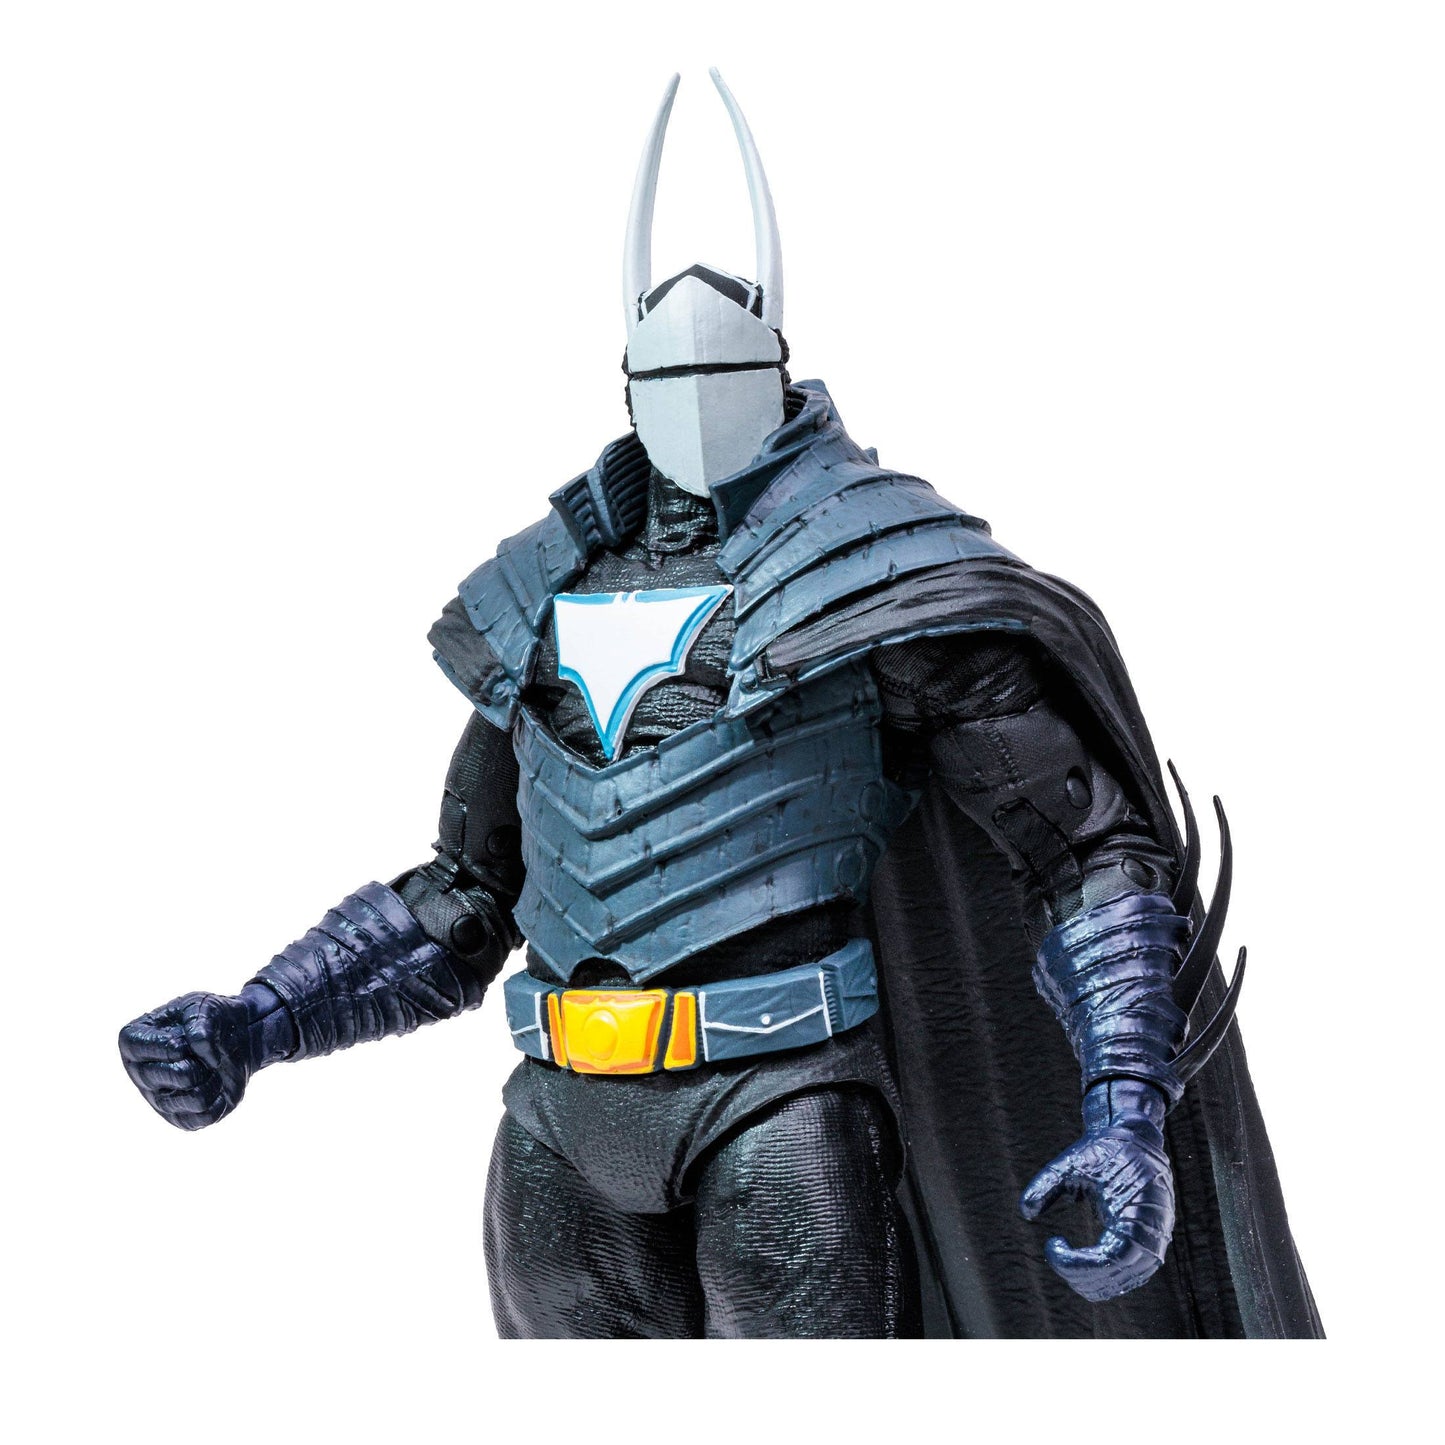 Batman Duke Thomas - Articulated figurine